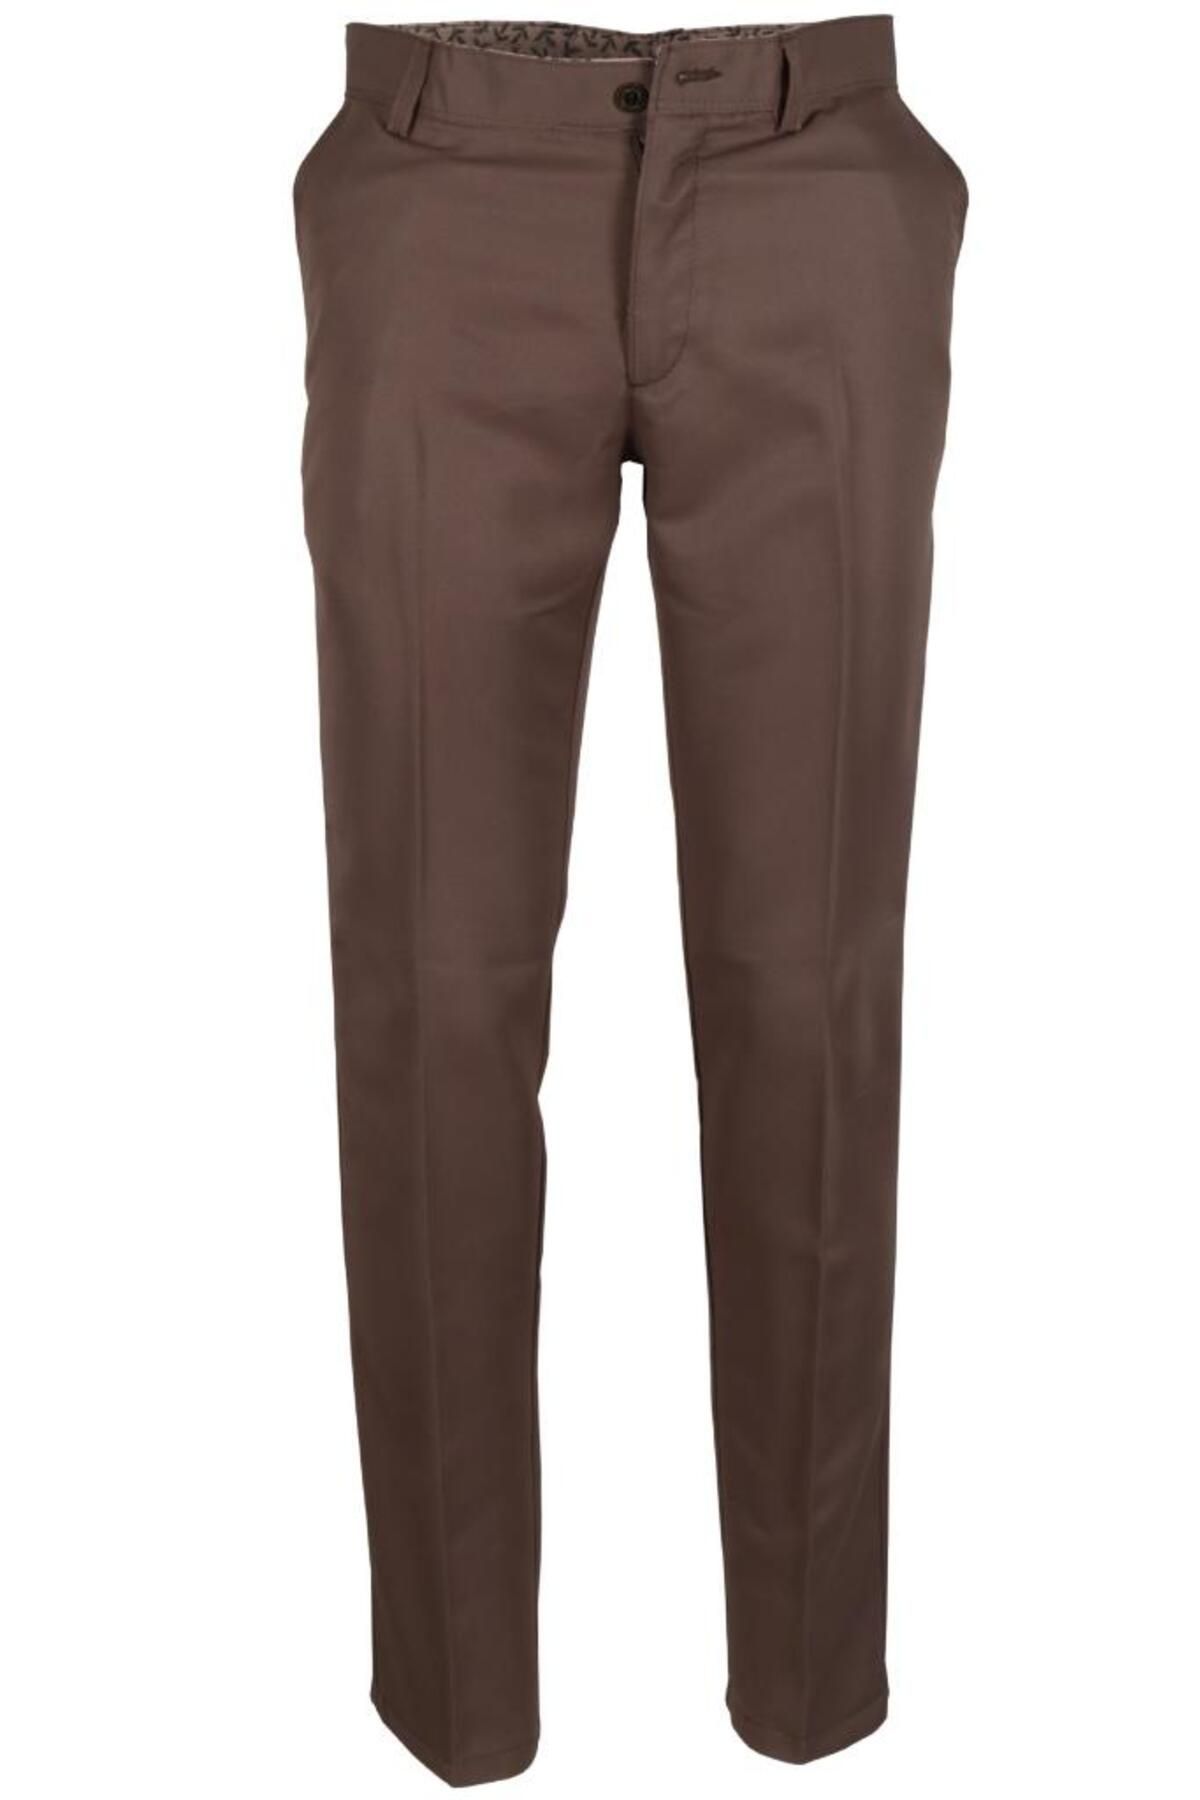 Modarar Erkek Keten Pantolon Klasik Normal Kesim RAR01155